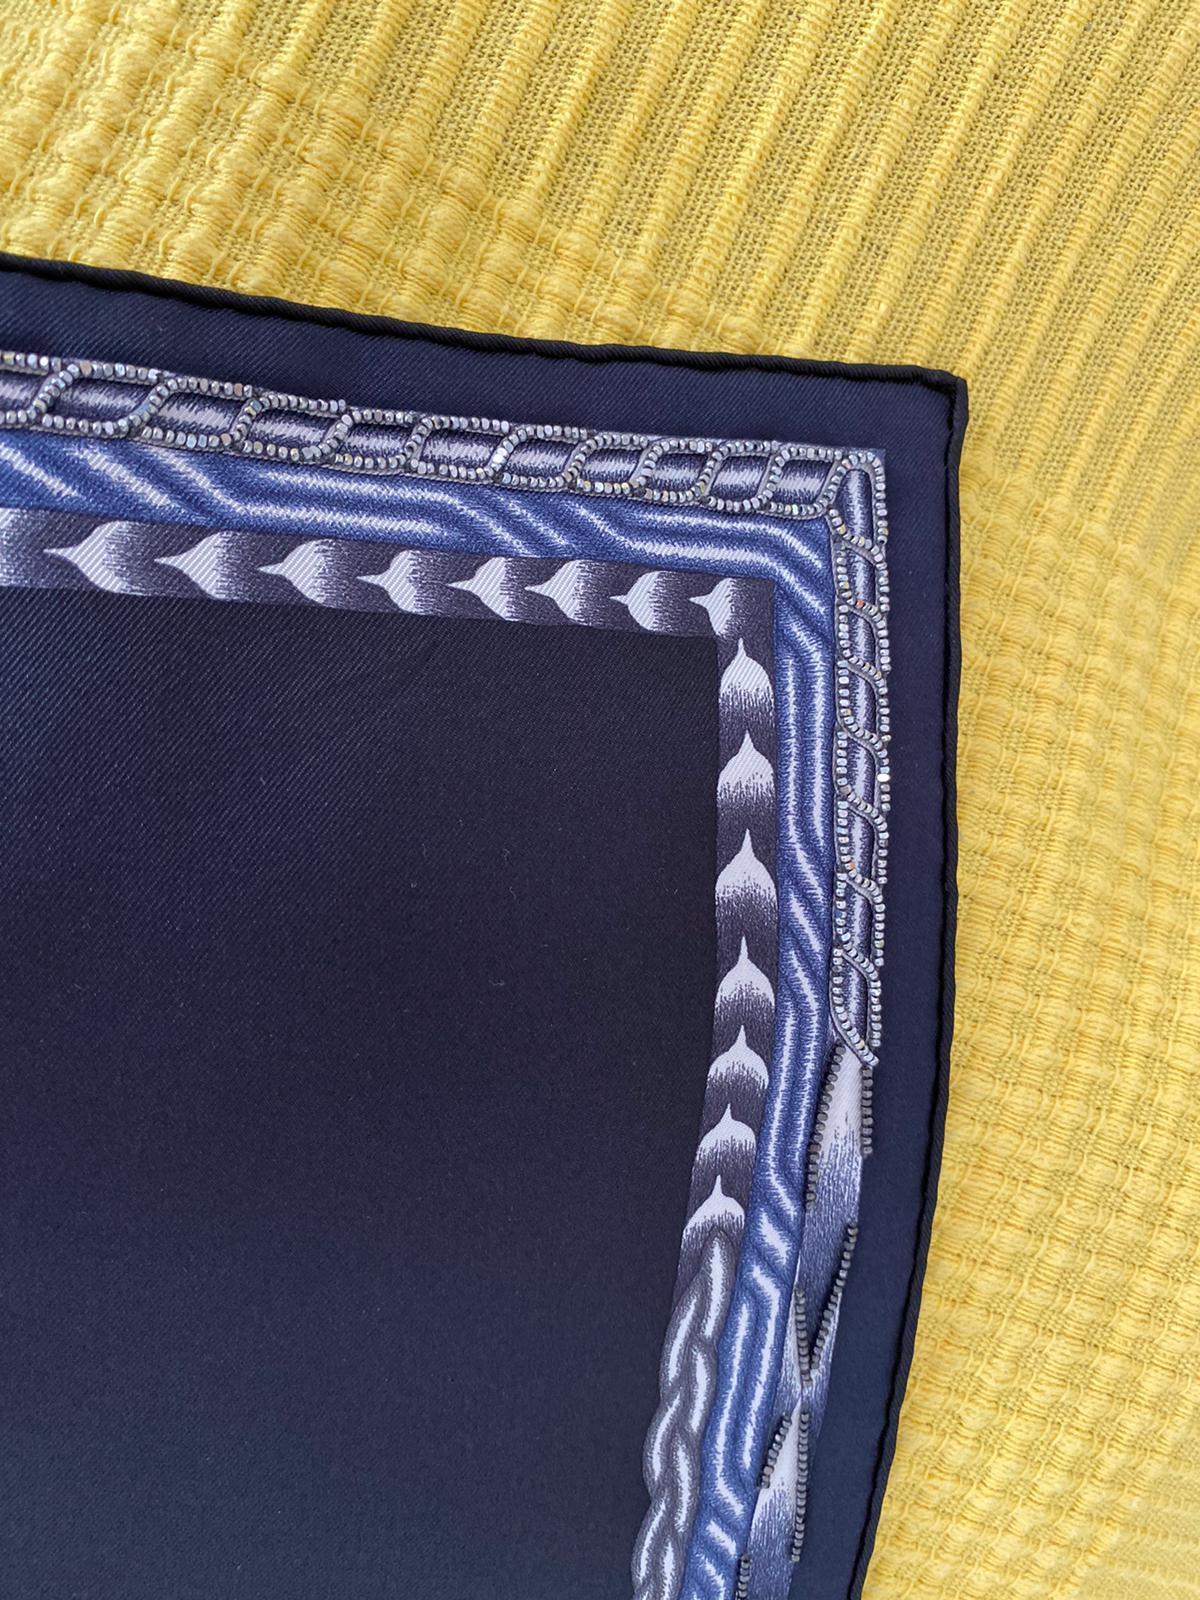 Hermès Silk Embroidered Scarf Robe du Soir Marine Blanc Manlik 2018 90 cm GRAIL 6